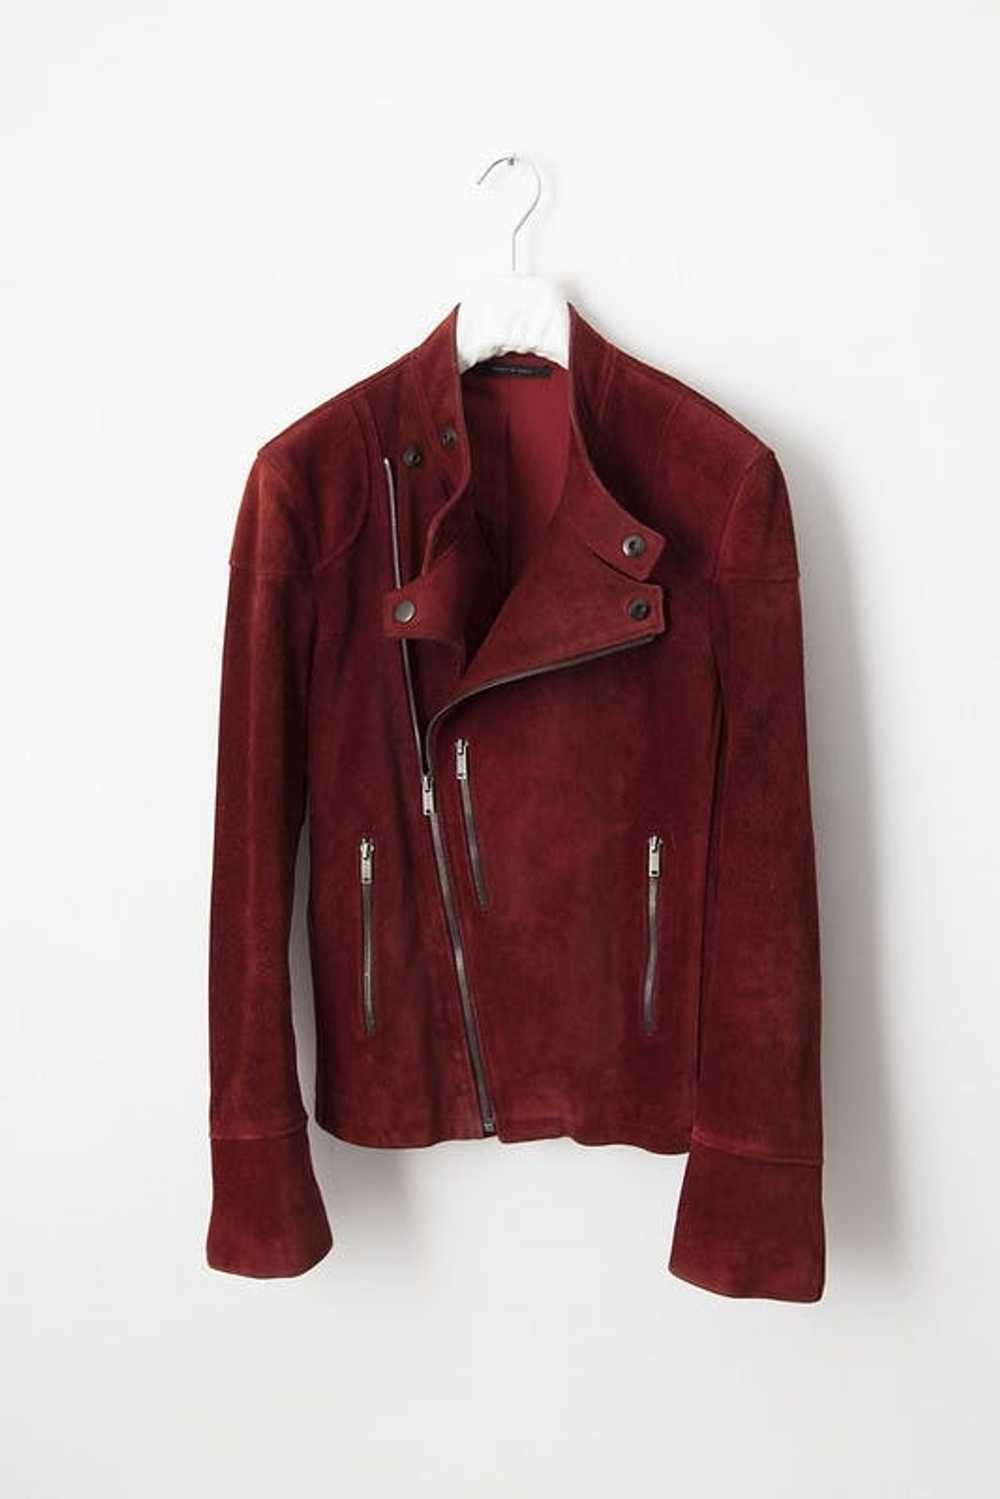 Gucci Red suede biker jacket - image 3